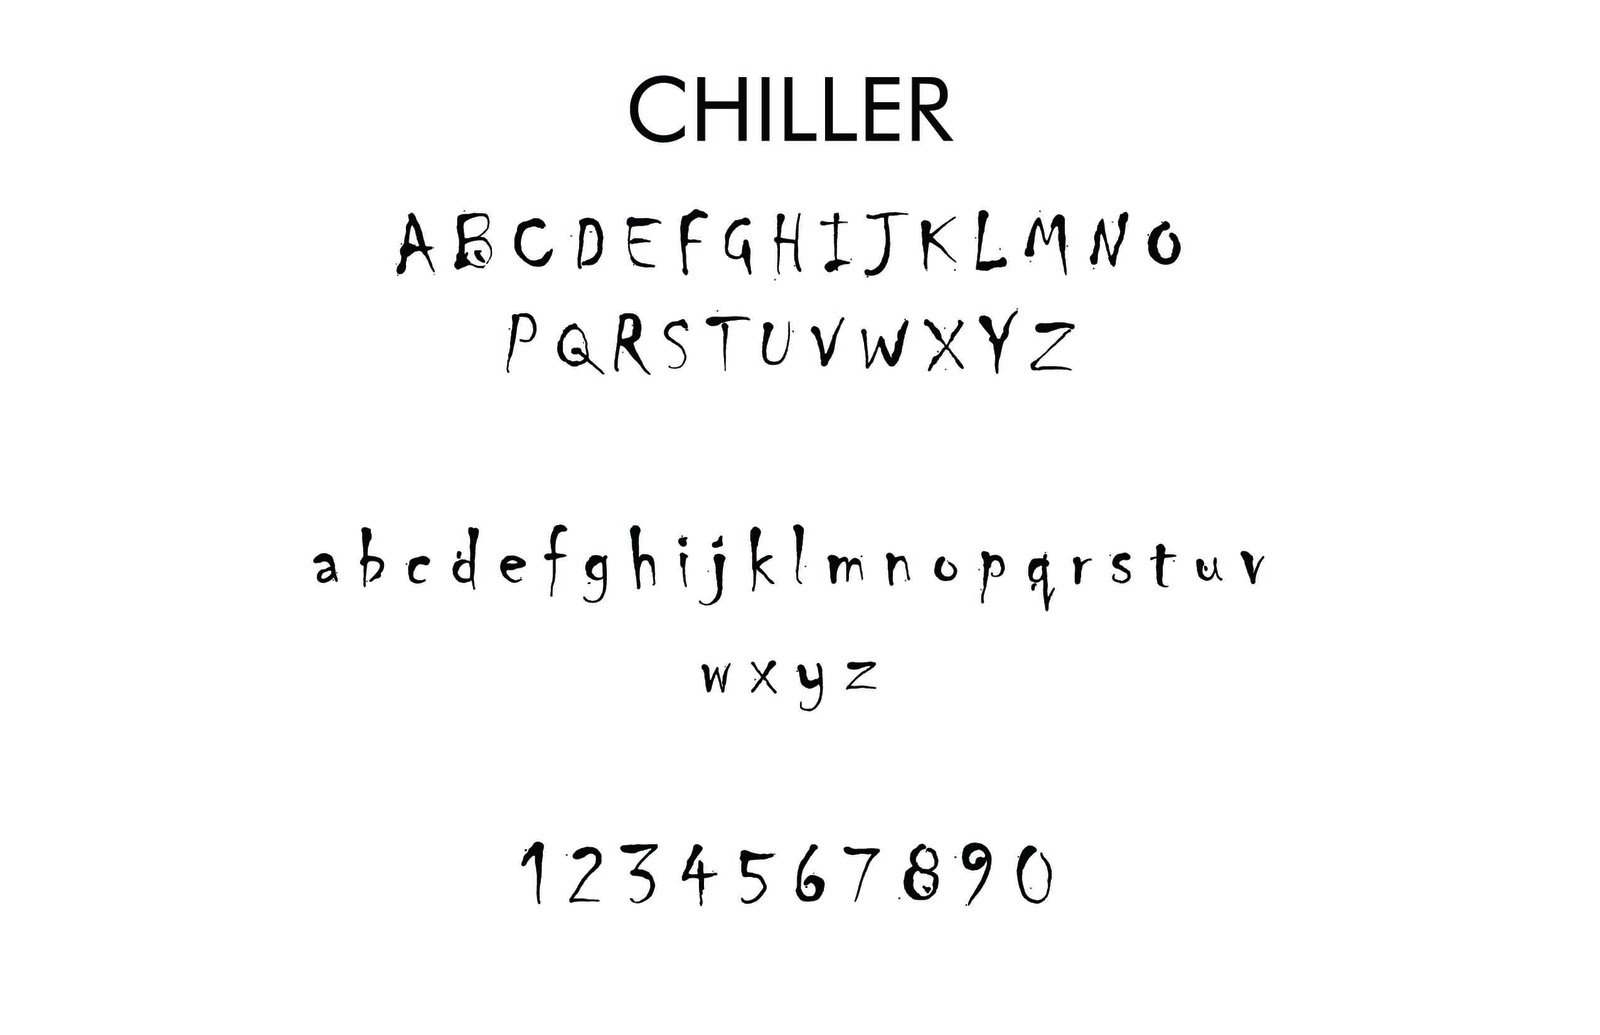 Chiller Font for Microsoft Word